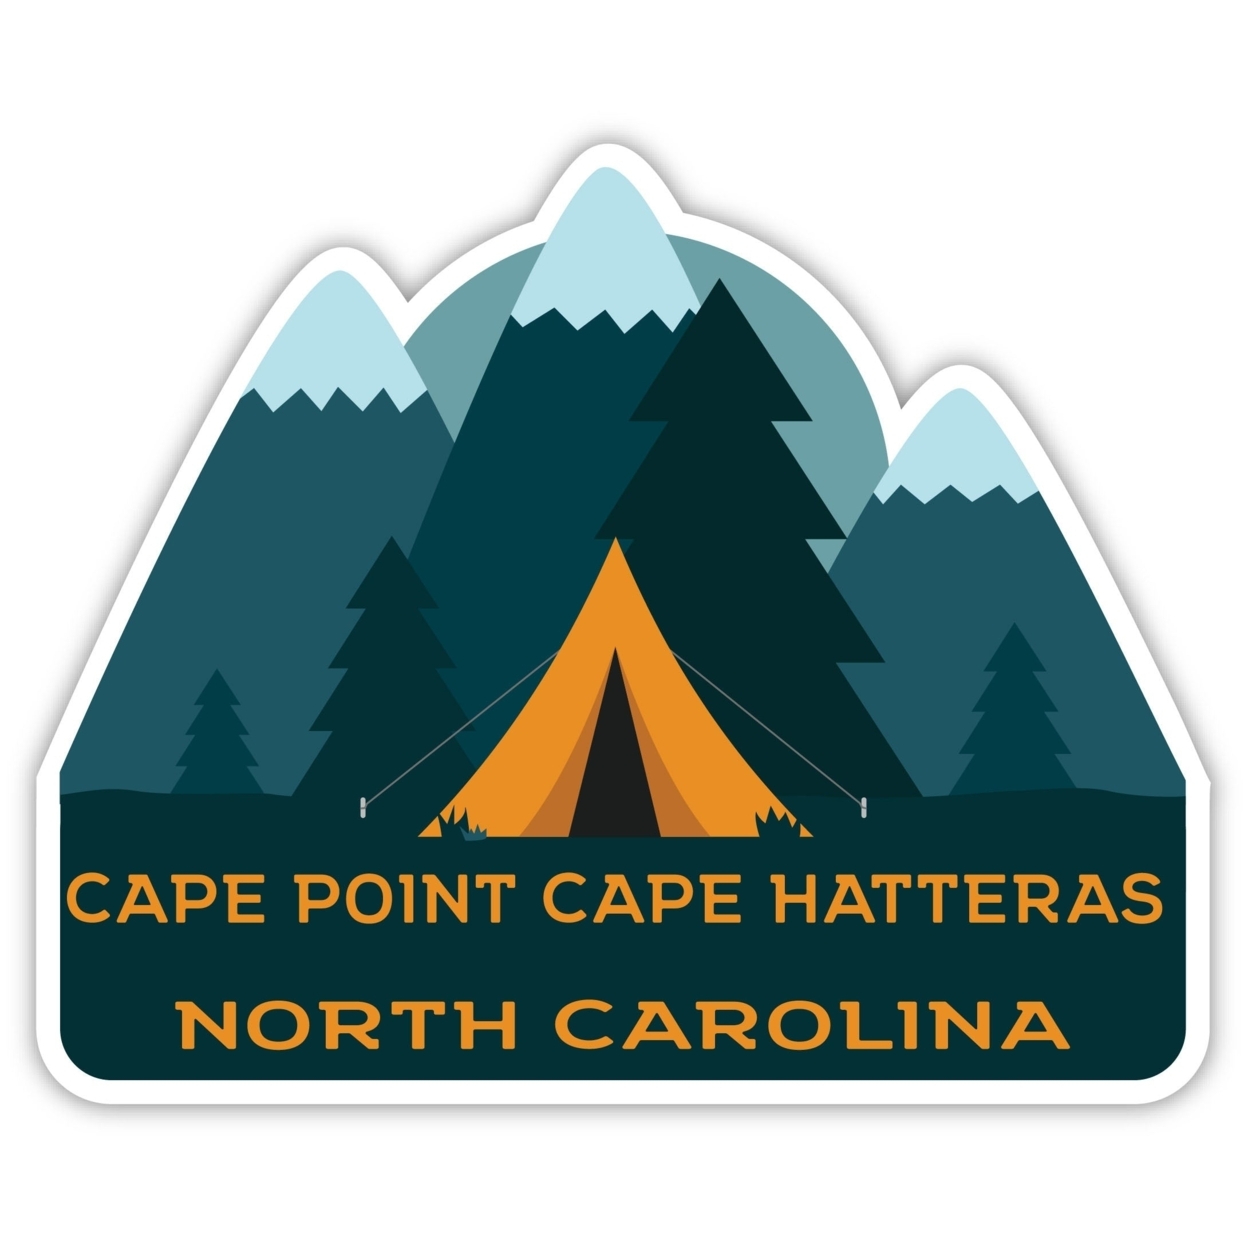 Cape Point Cape Hatteras North Carolina Souvenir Decorative Stickers (Choose Theme And Size) - Single Unit, 2-Inch, Tent